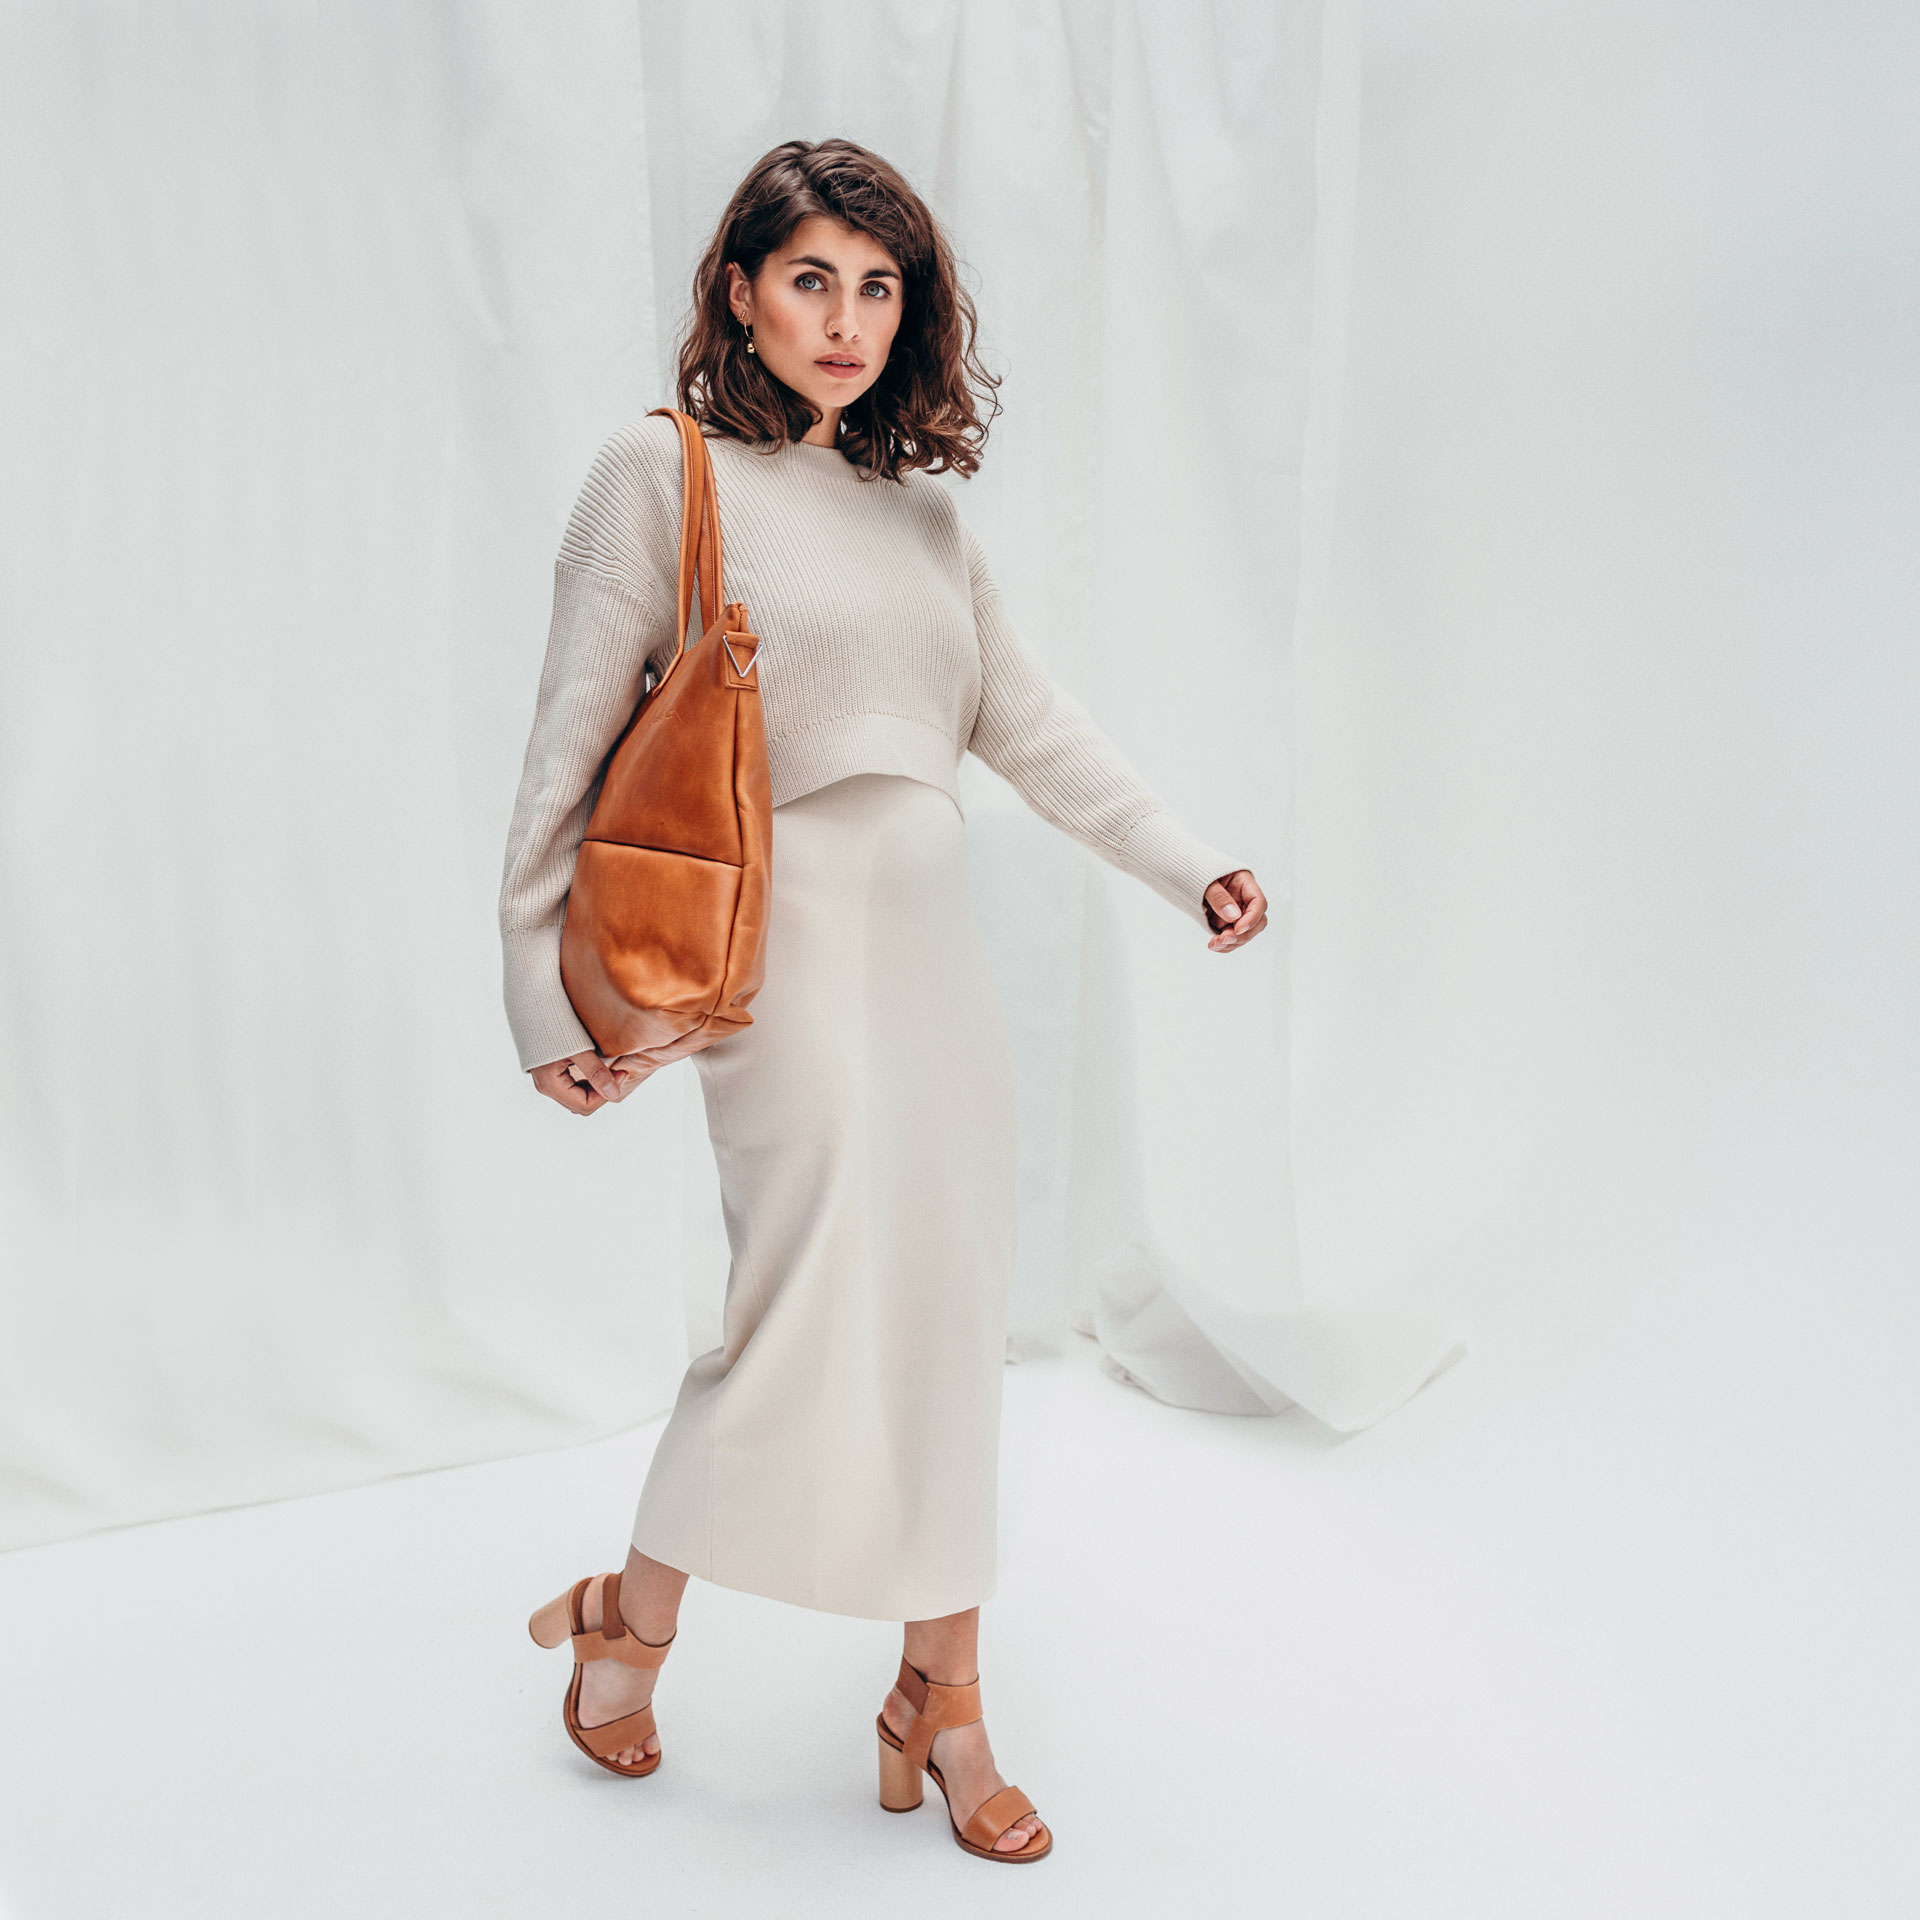 Model mit Shopper Ela aus nachhaltigem Leder in cognac geölt